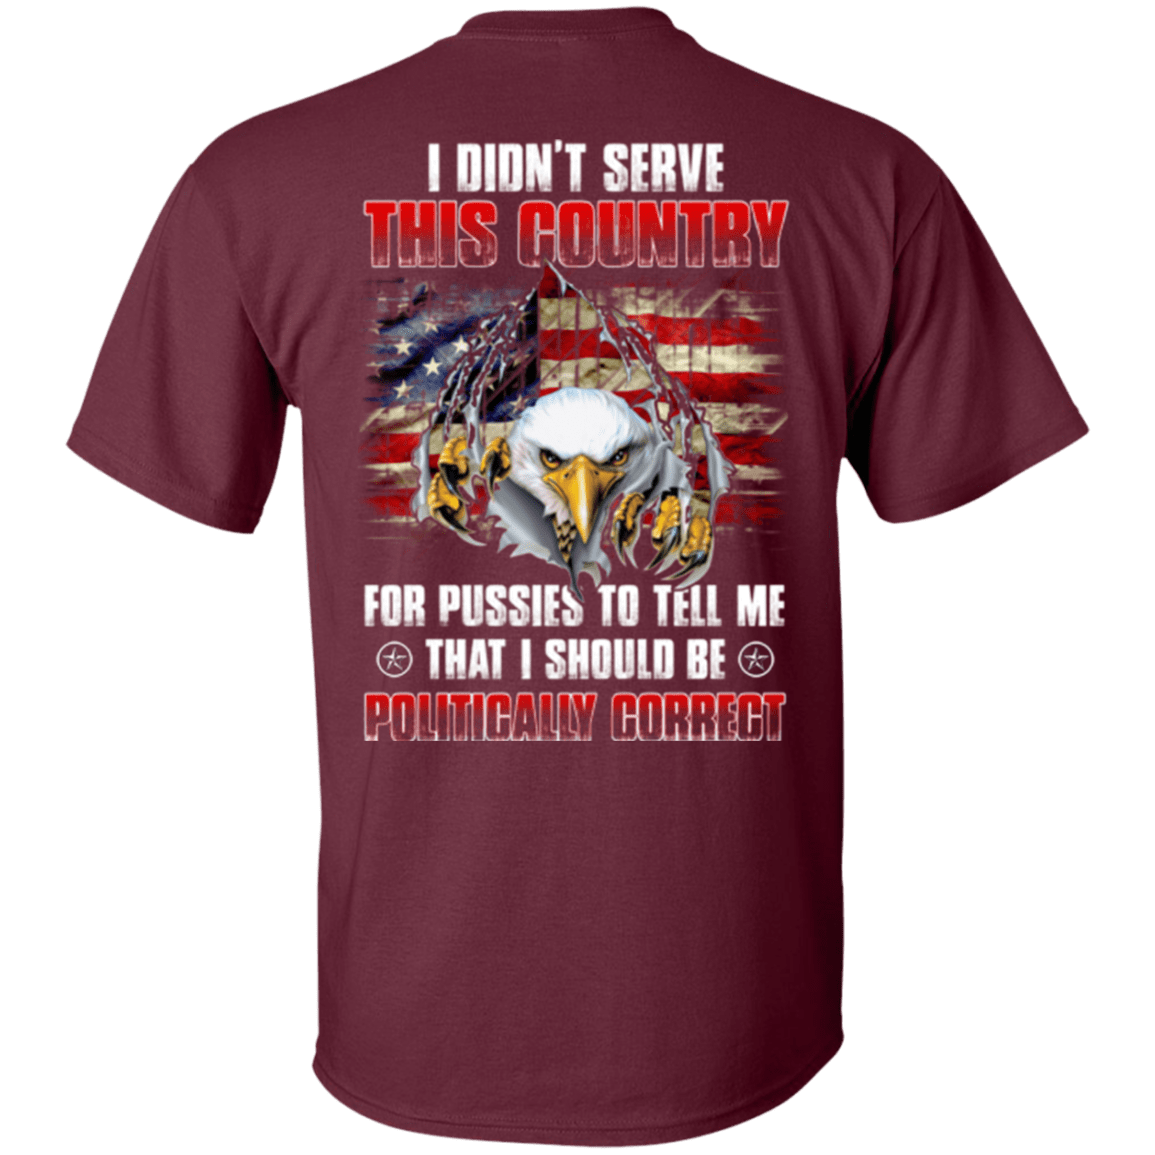 Military T-Shirt "Veteran - I Didn't Serve This Country"-TShirt-General-Veterans Nation